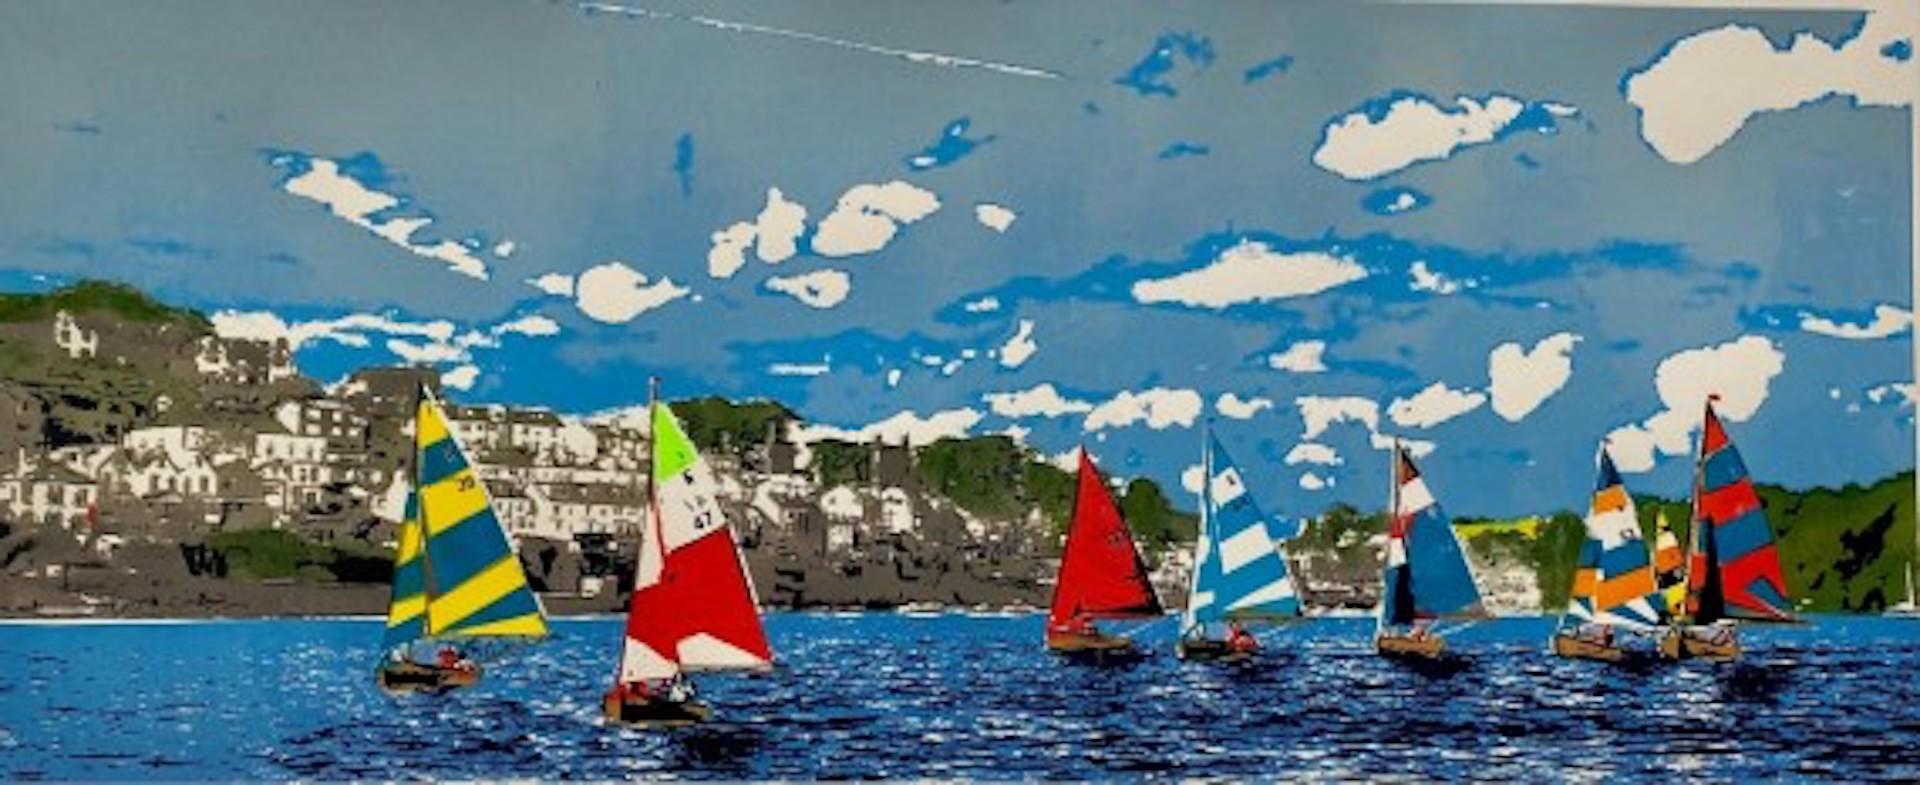 Robyn Forbes, Fowey Sailing, Limited Edition Print, Sailing Art, Affordable Art